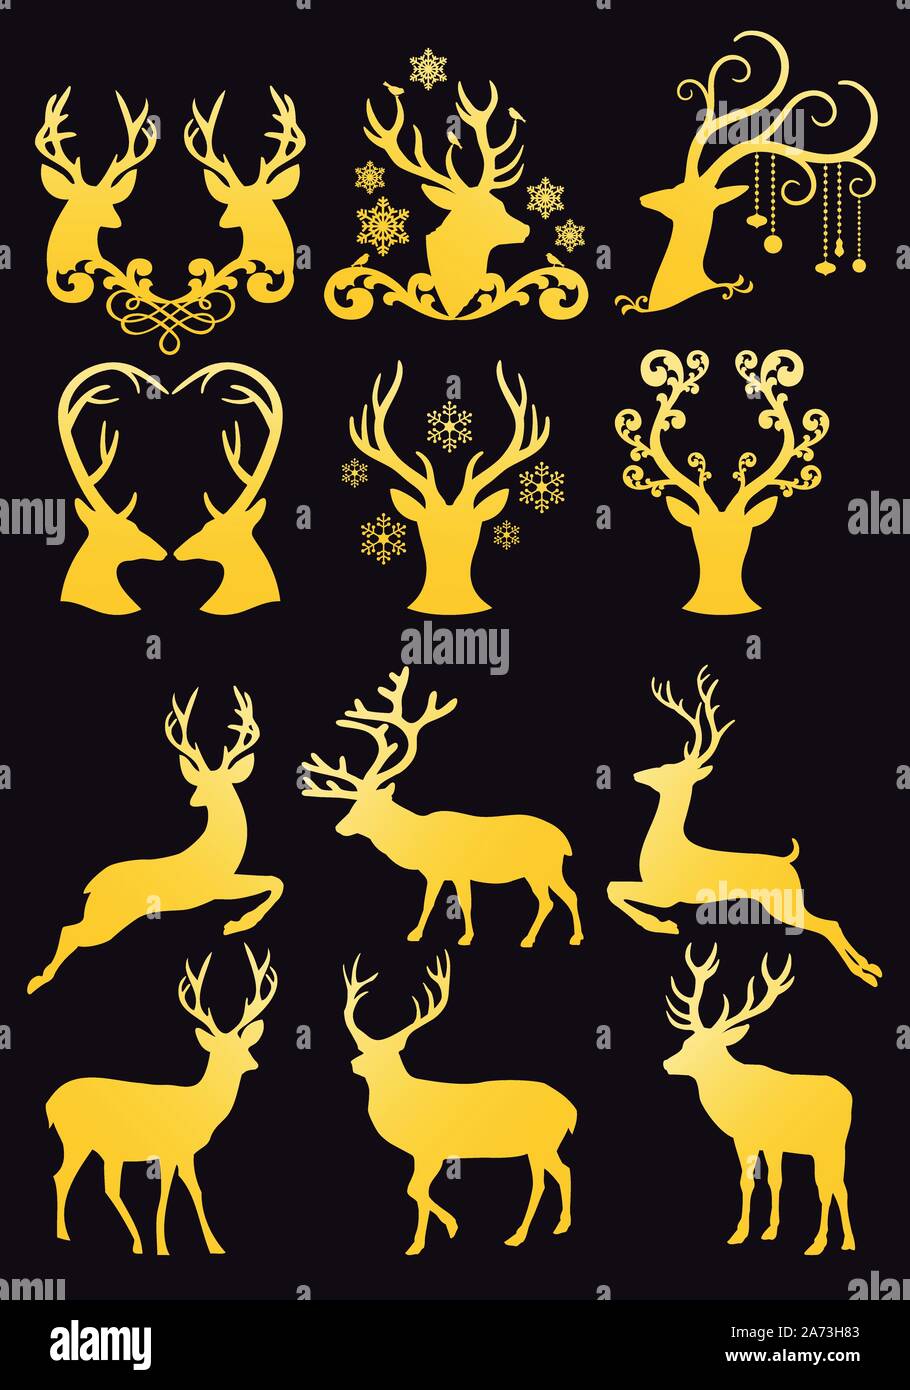 Gold Christmas deer heads, golden reindeer silhouettes for cards, set of vector design element Stock Vector